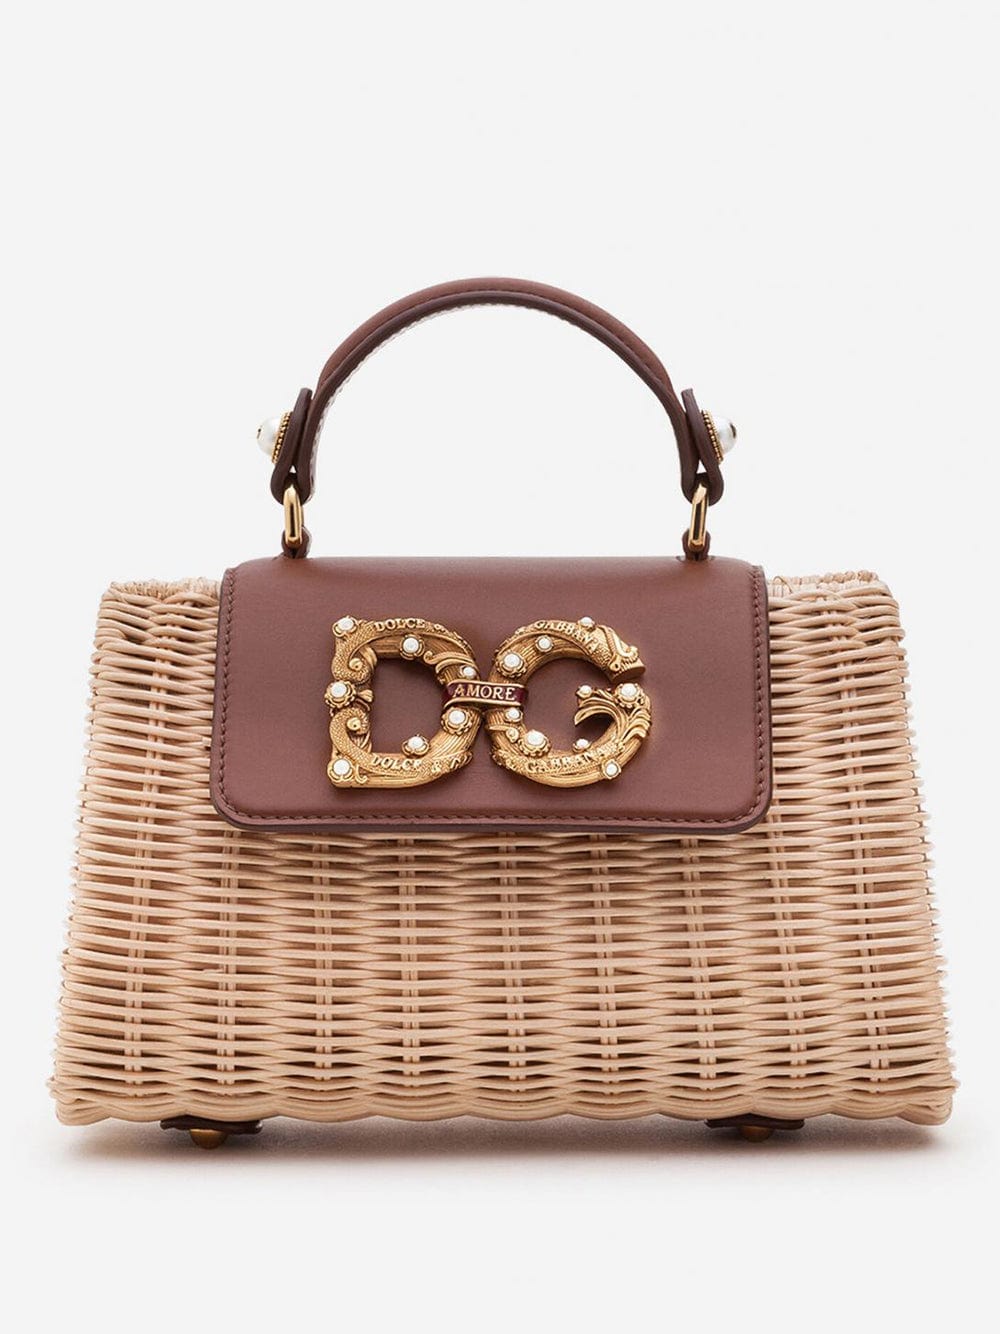 Dolce & Gabbana DG Amore in Wicker Tote Bag